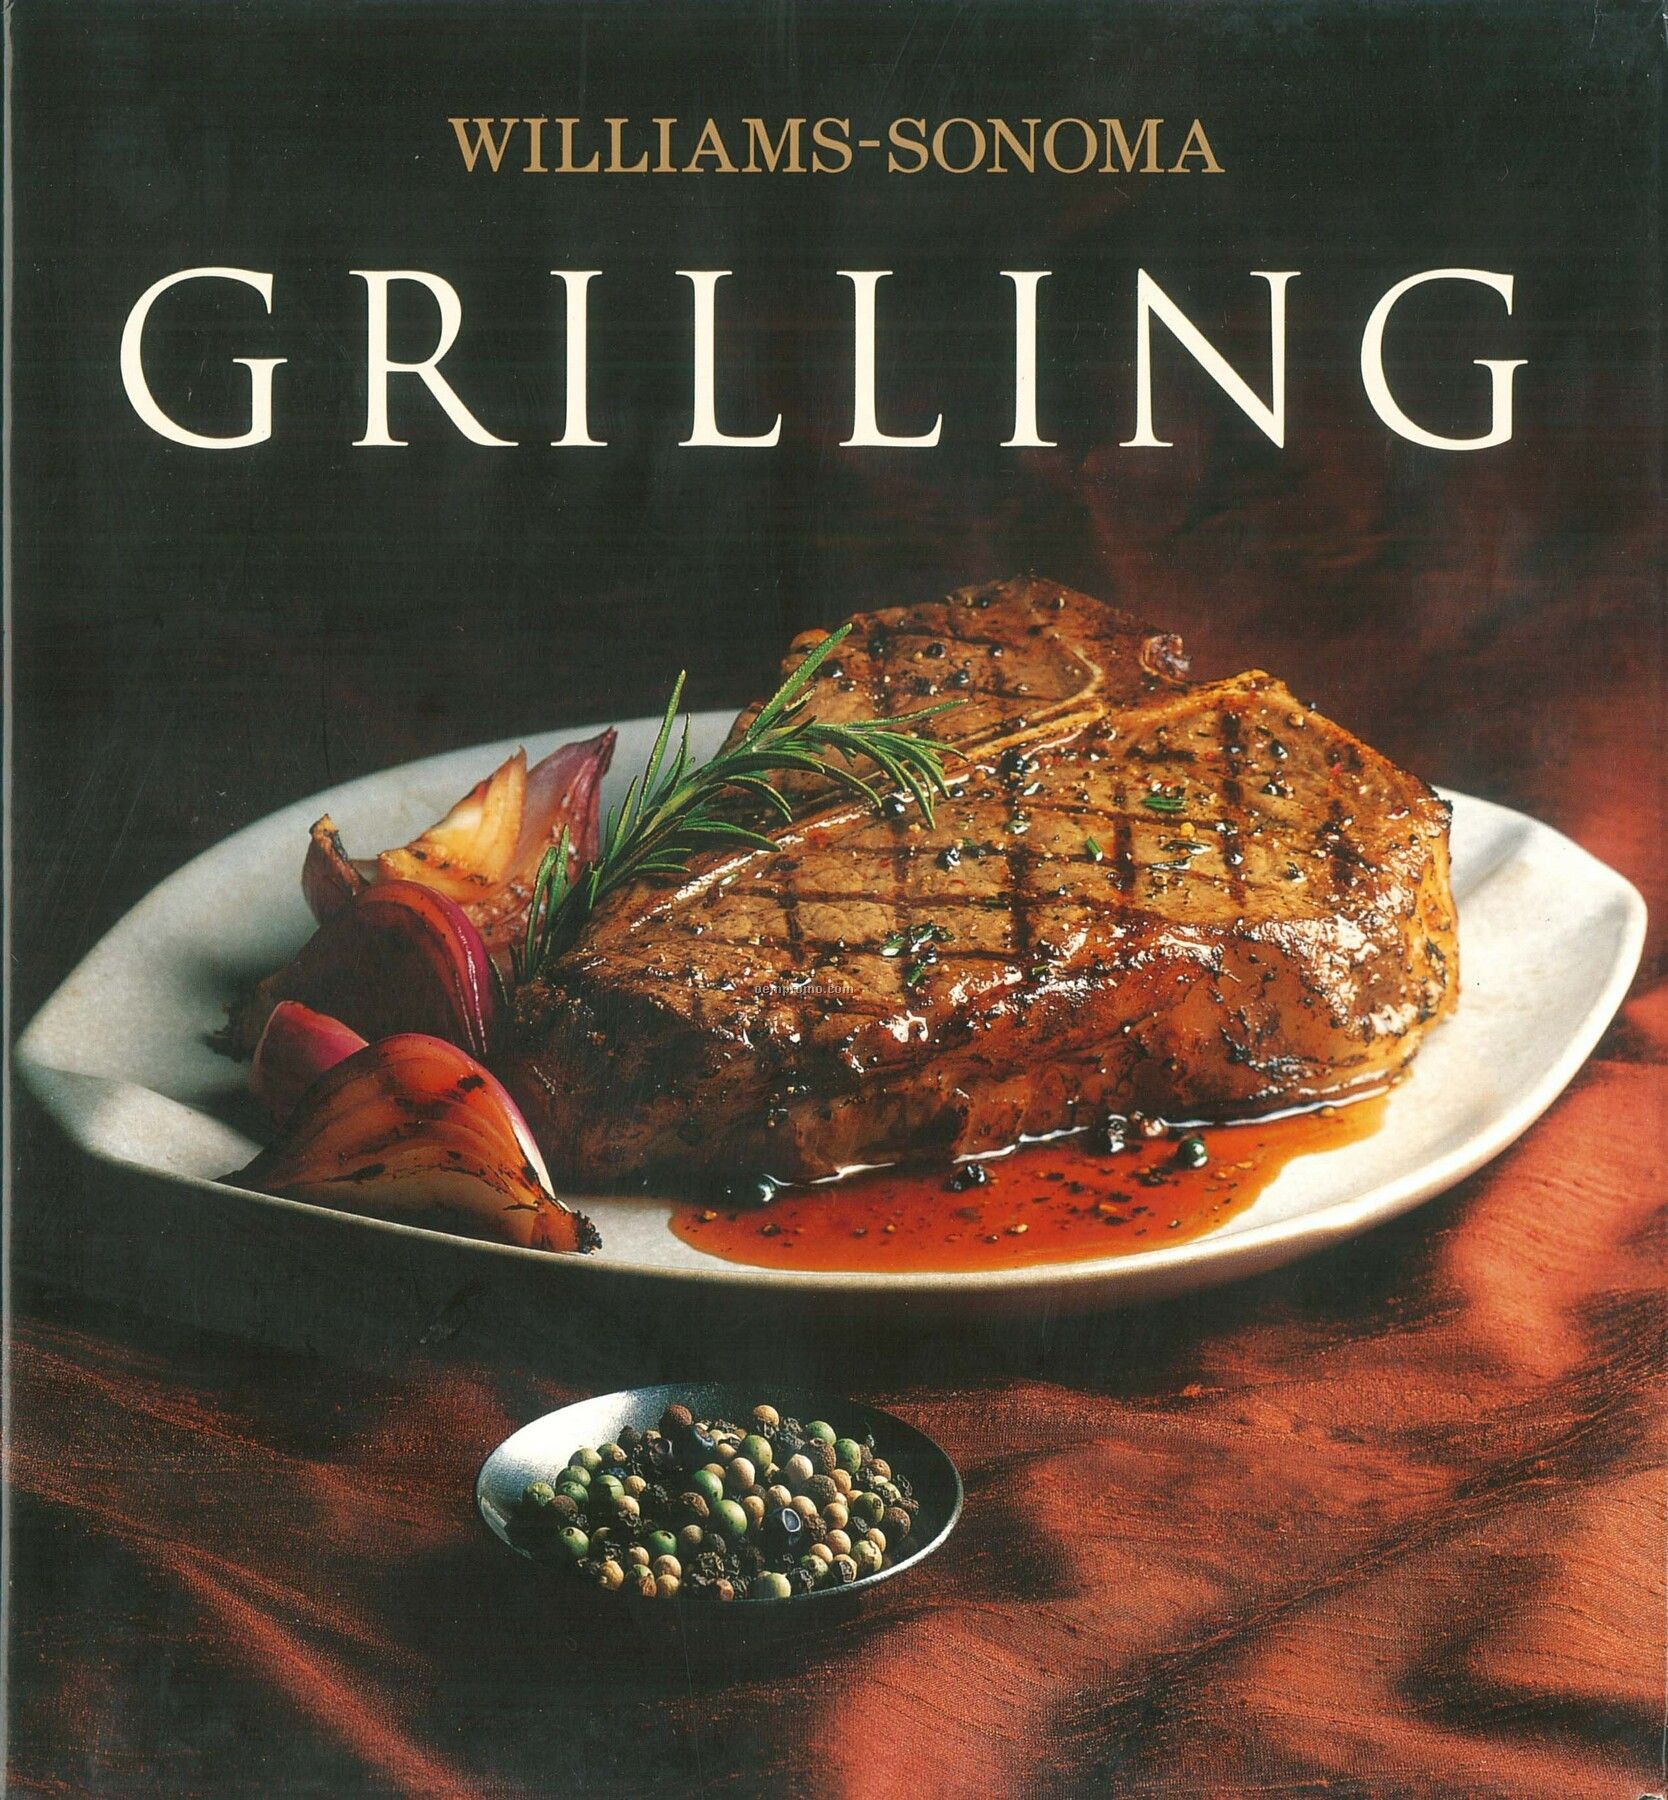 Williams-sonoma Grilling Cookbook